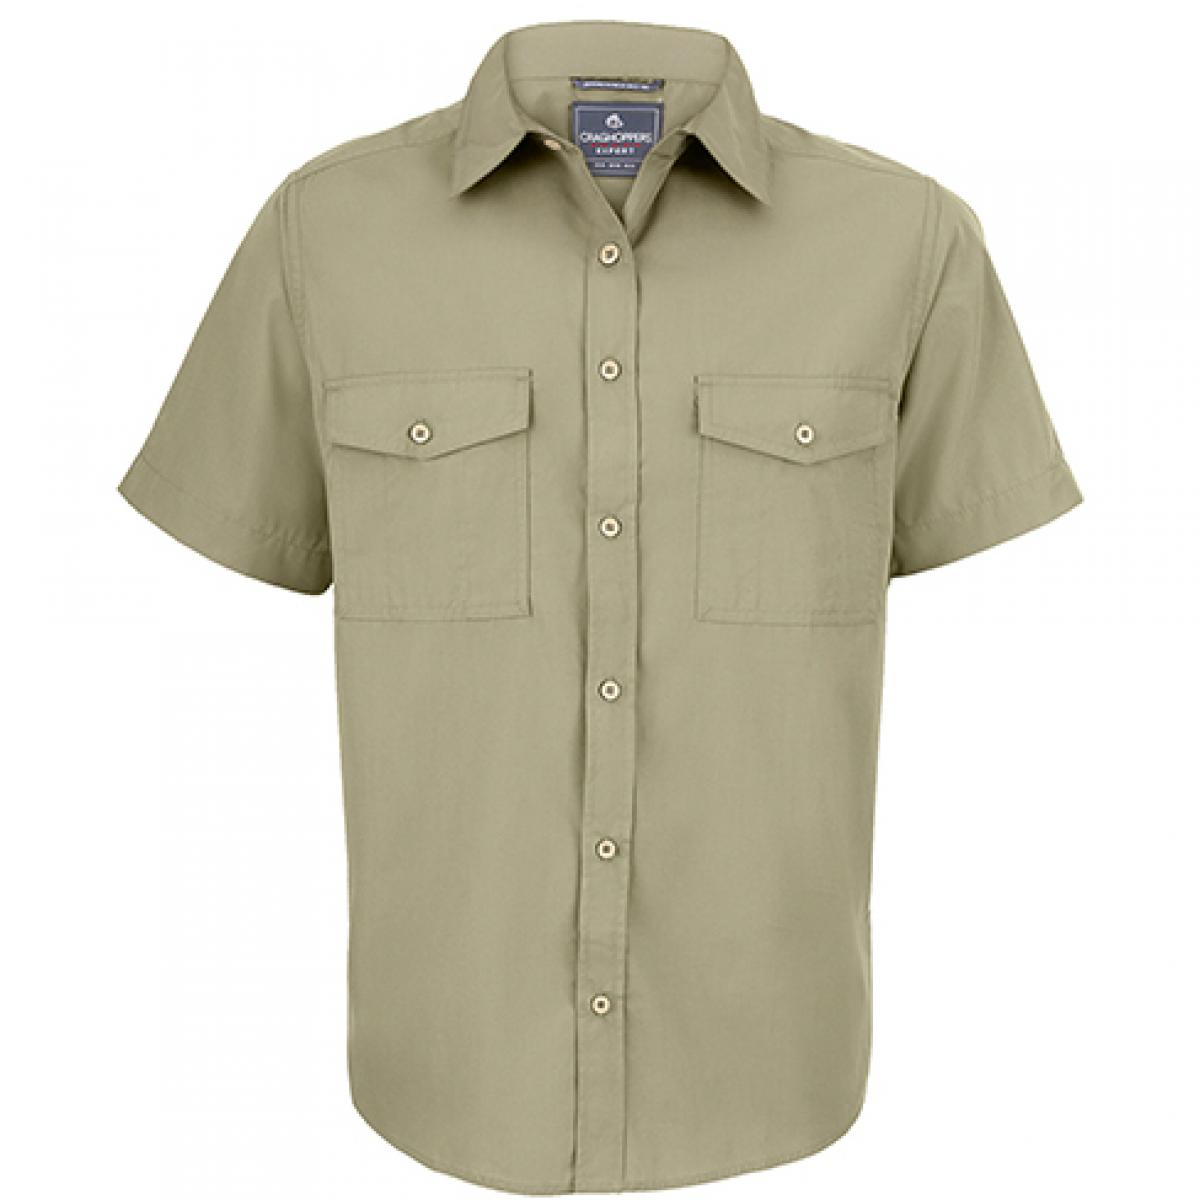 Hersteller: Craghoppers Expert Herstellernummer: CES003 Artikelbezeichnung: Expert Kiwi Short Sleeved Shirt Farbe: Pebble